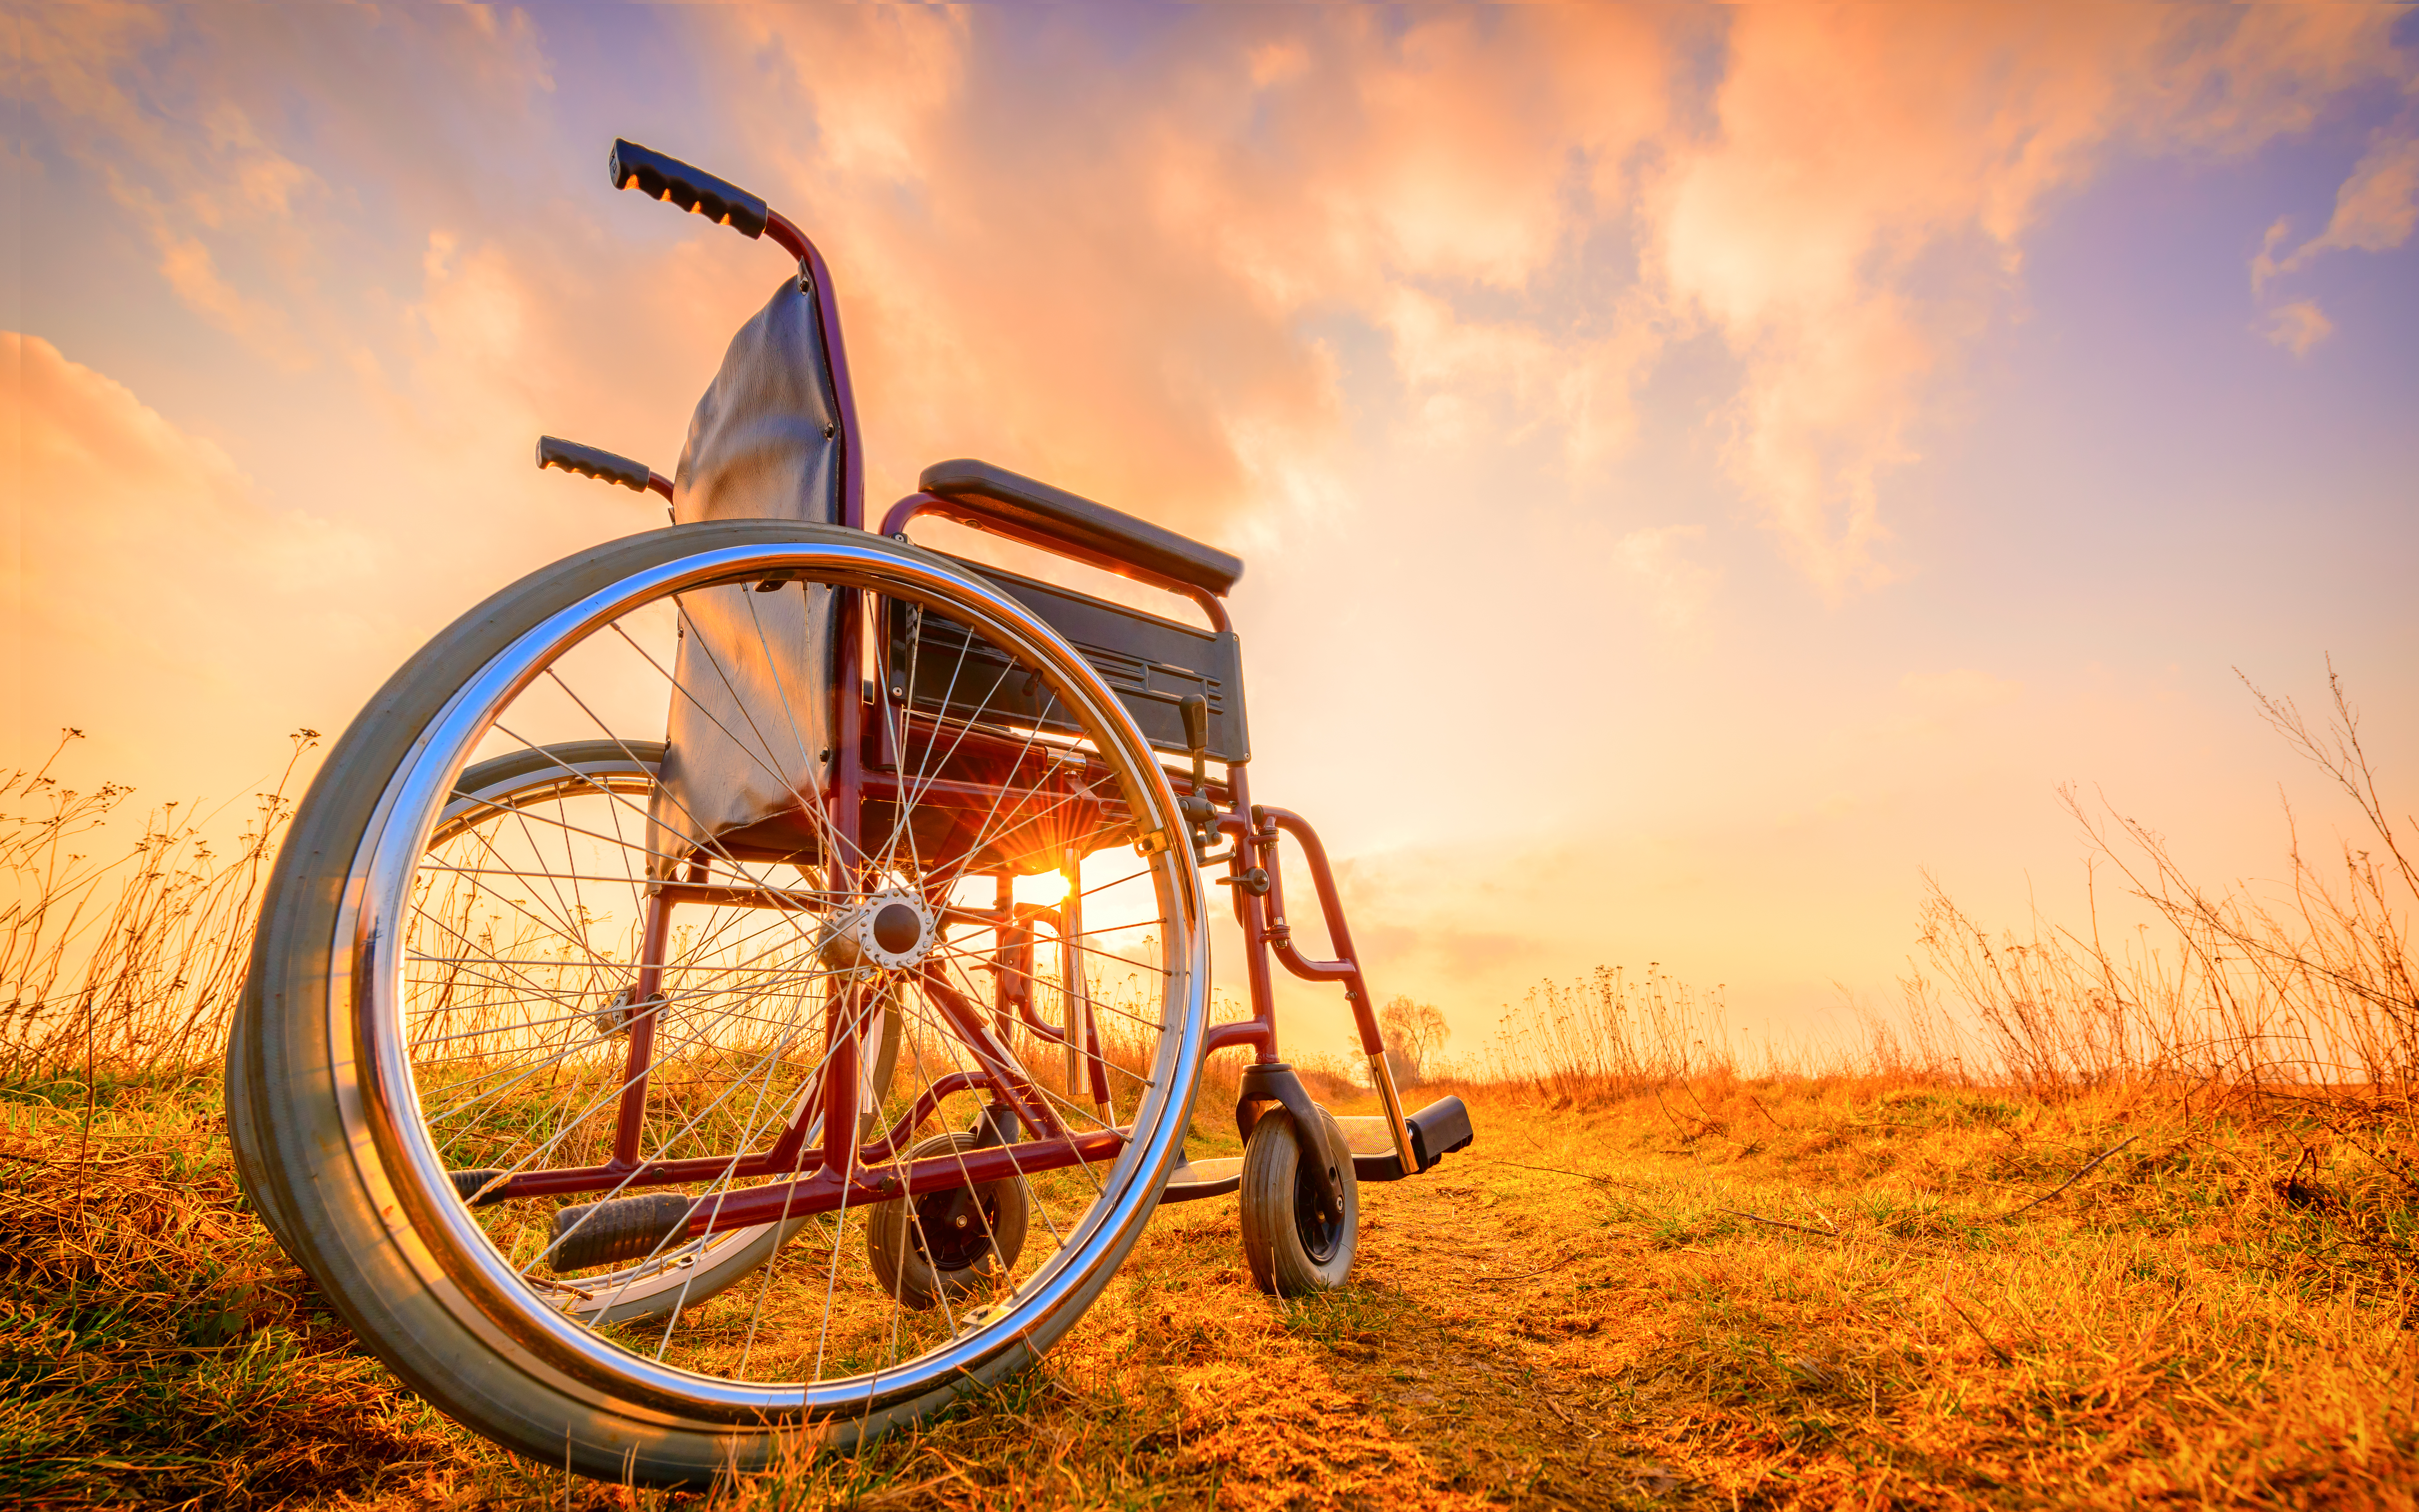 Blijvende invaliditeit na letselschade: wat moet je weten?